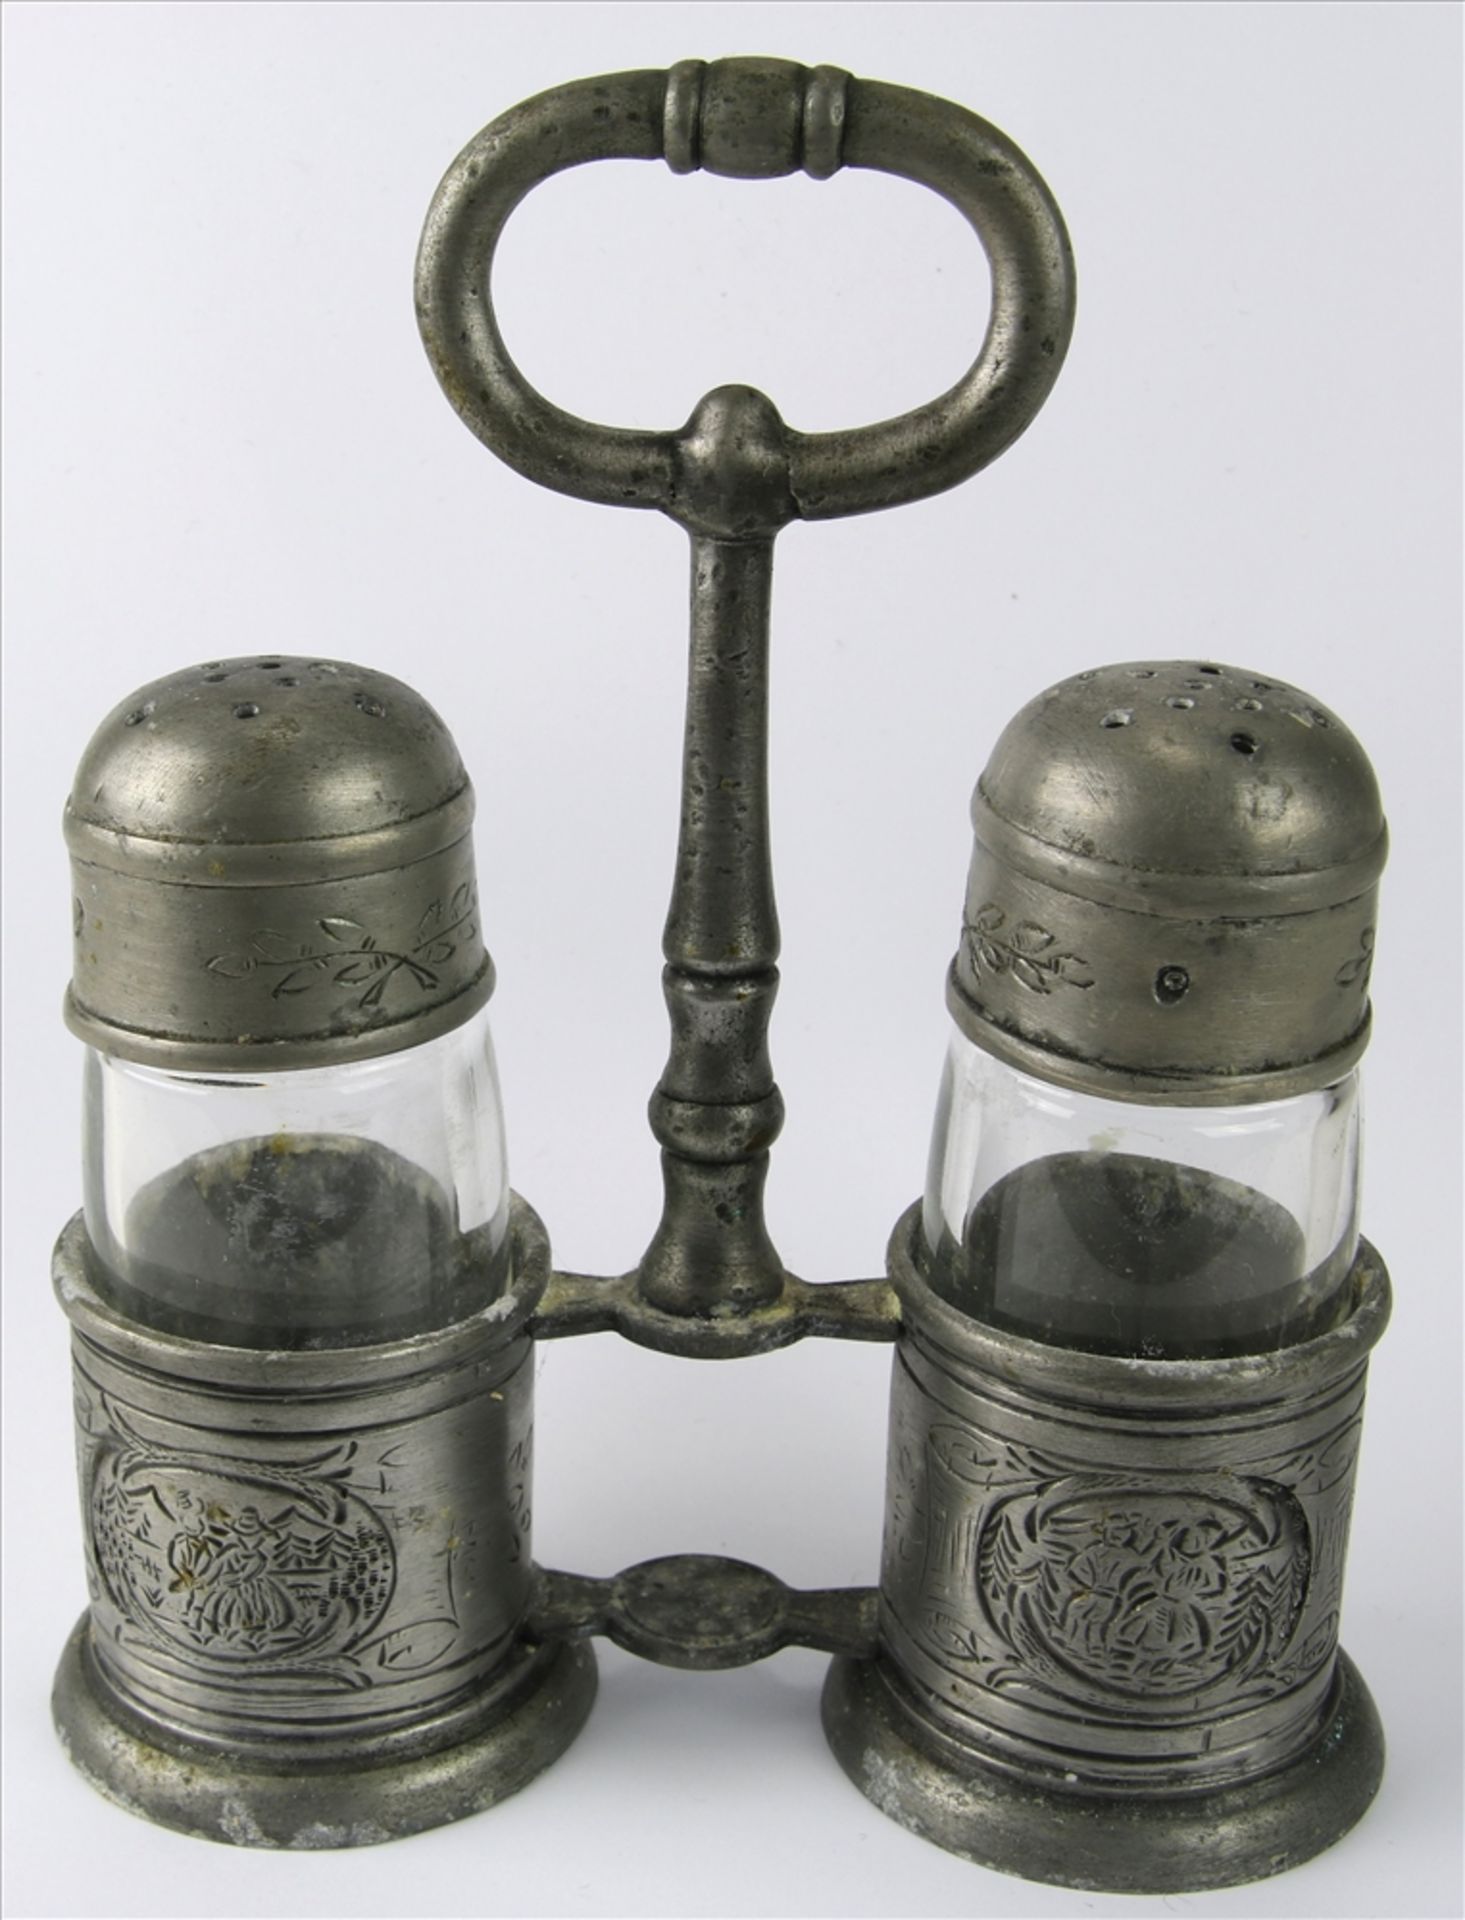 Menage Pfeffer-Salz um 1900 im Barockstil. Zinn und Glas. Größe ca. 14 x 8 cm, Höhe ca. 12 cm.